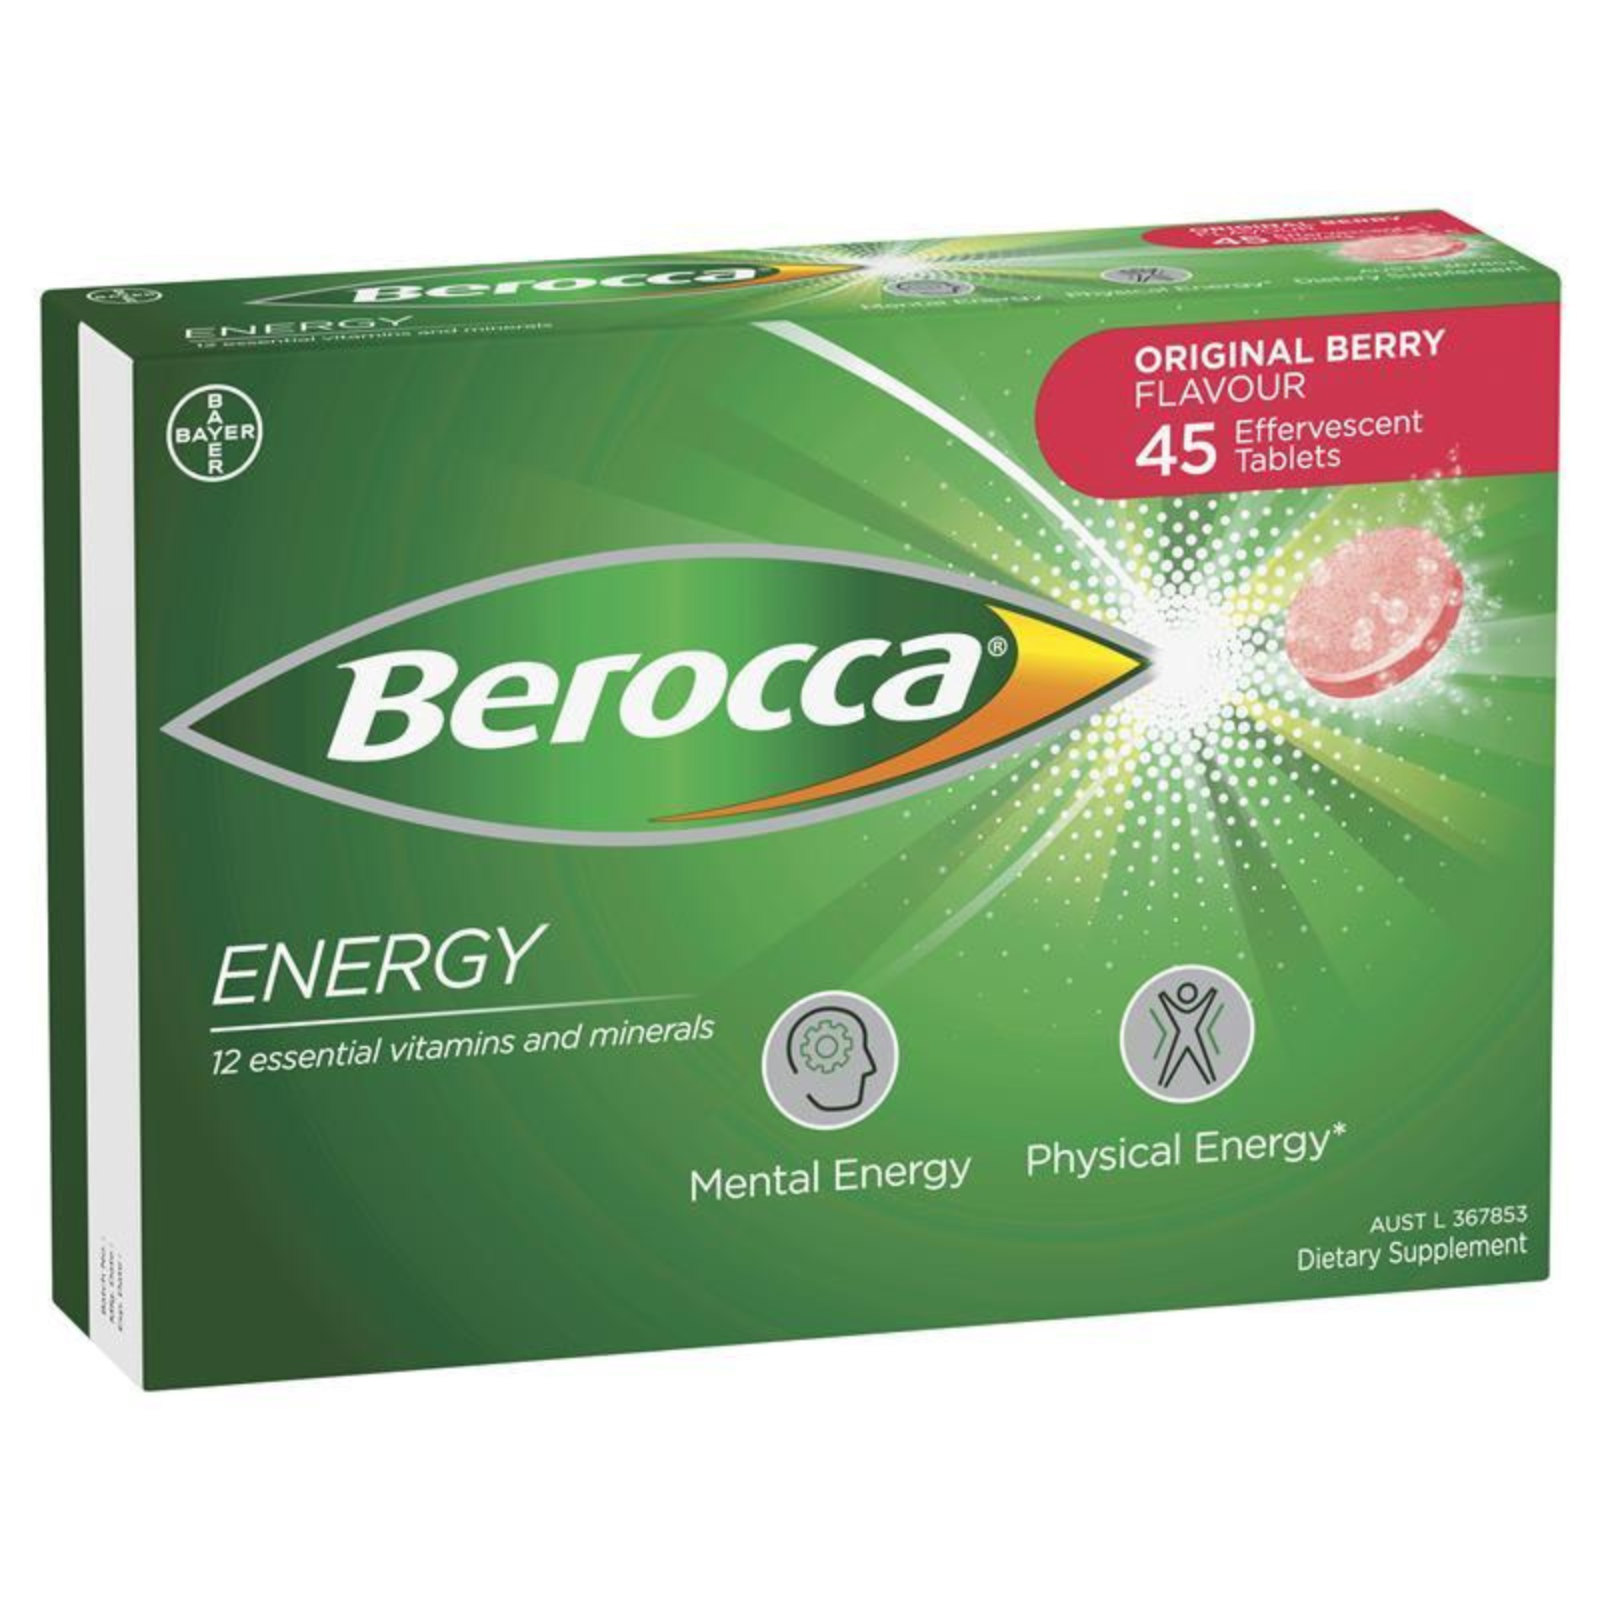 Berocca Energy Vitamin B & C Original Berry Flavour Effervescent Tablets 45 Pack - $98.41